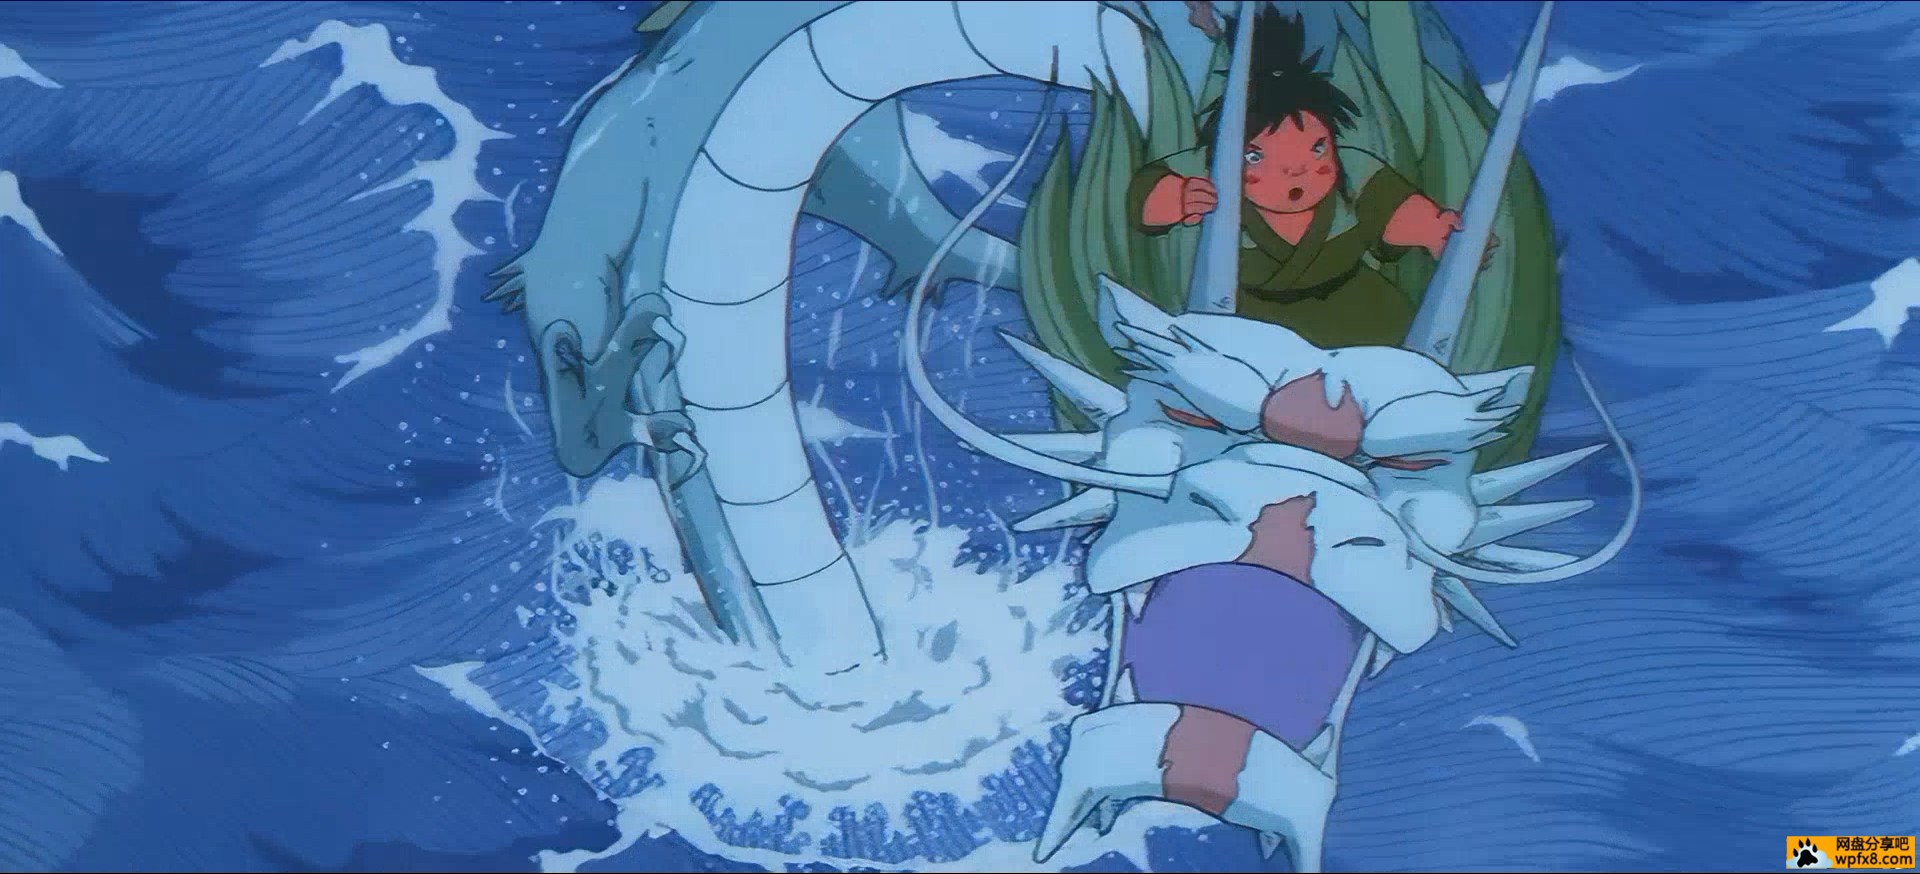 Taro.the.Dragon.Boy.1979.1080p.webrip.x264.多国语言.多国字幕.mkv_010712.373.jpg